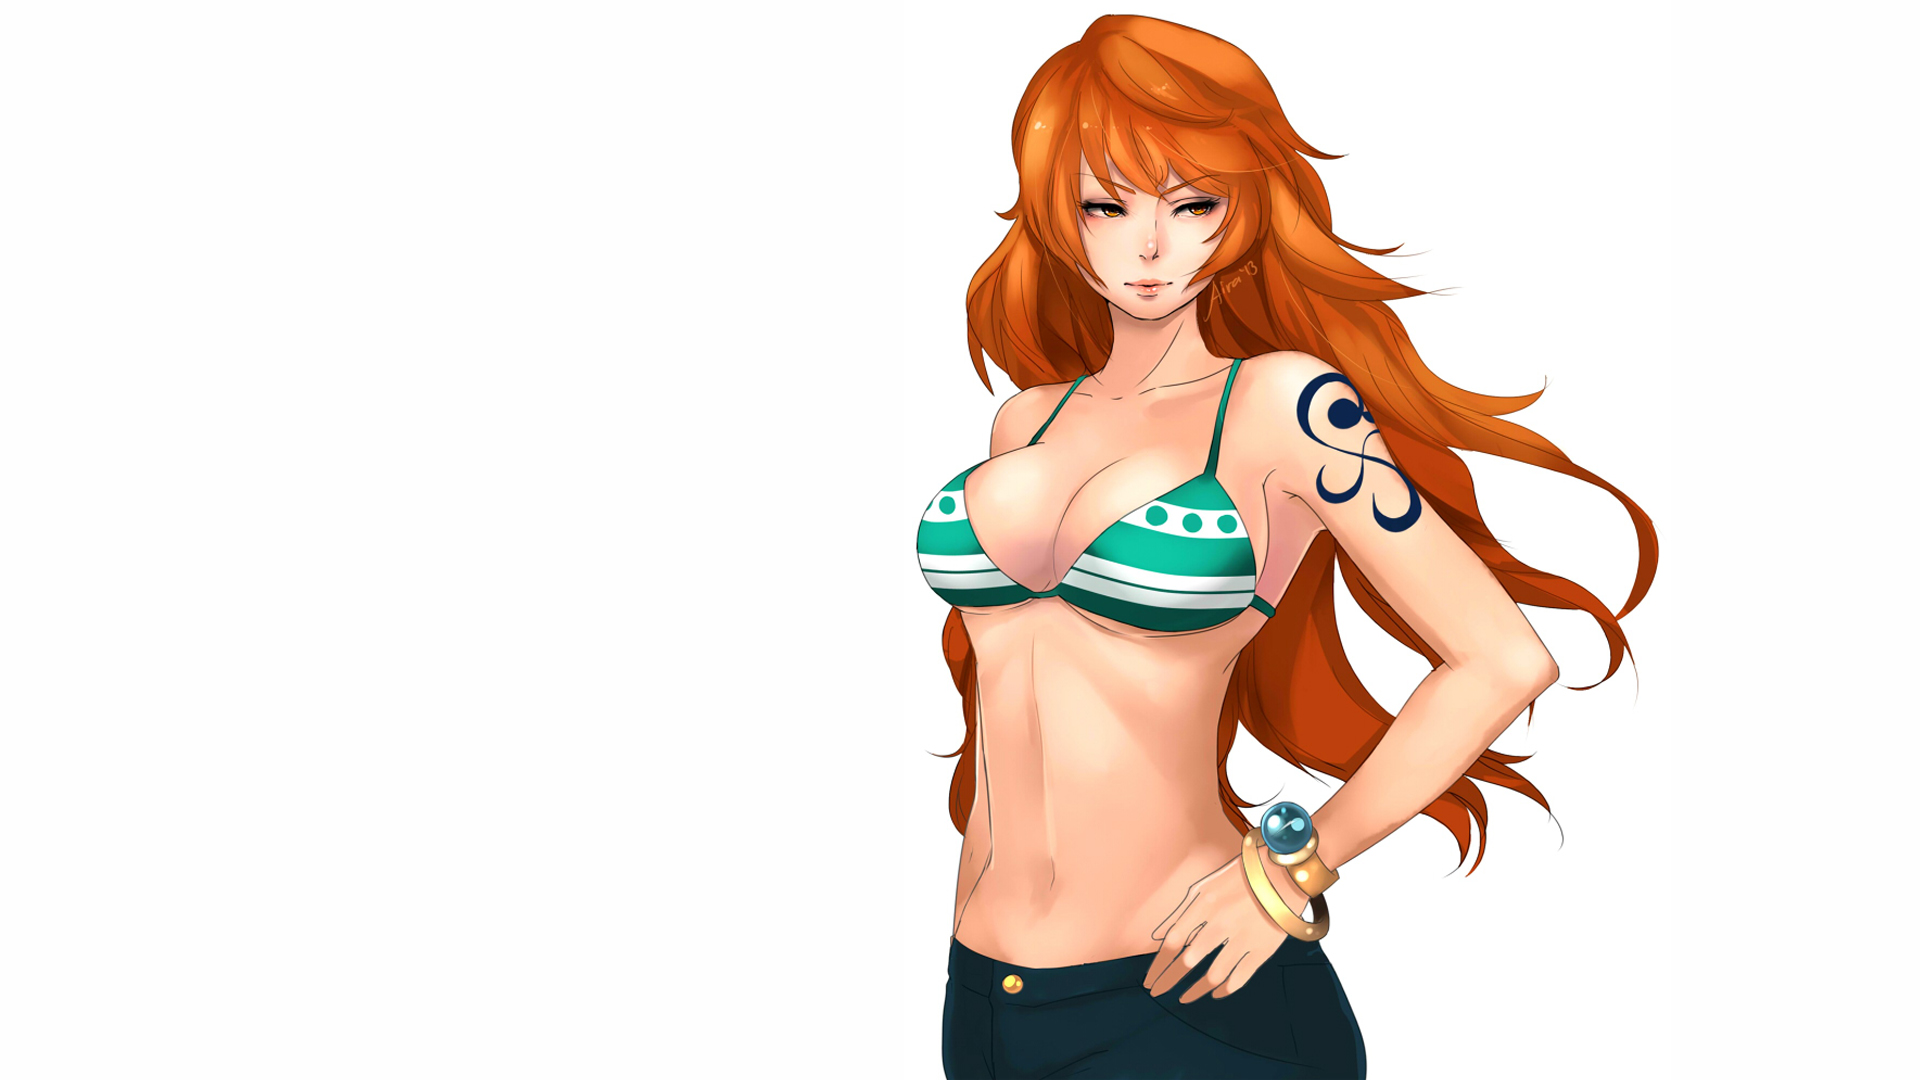 Redhead Bikini Porn Hentai - redhead, big boobs, fictional character, Nami, One Piece, boobs, tattoo,  bikini top, anime girls, artwork | 1920x1080 Wallpaper - wallhaven.cc